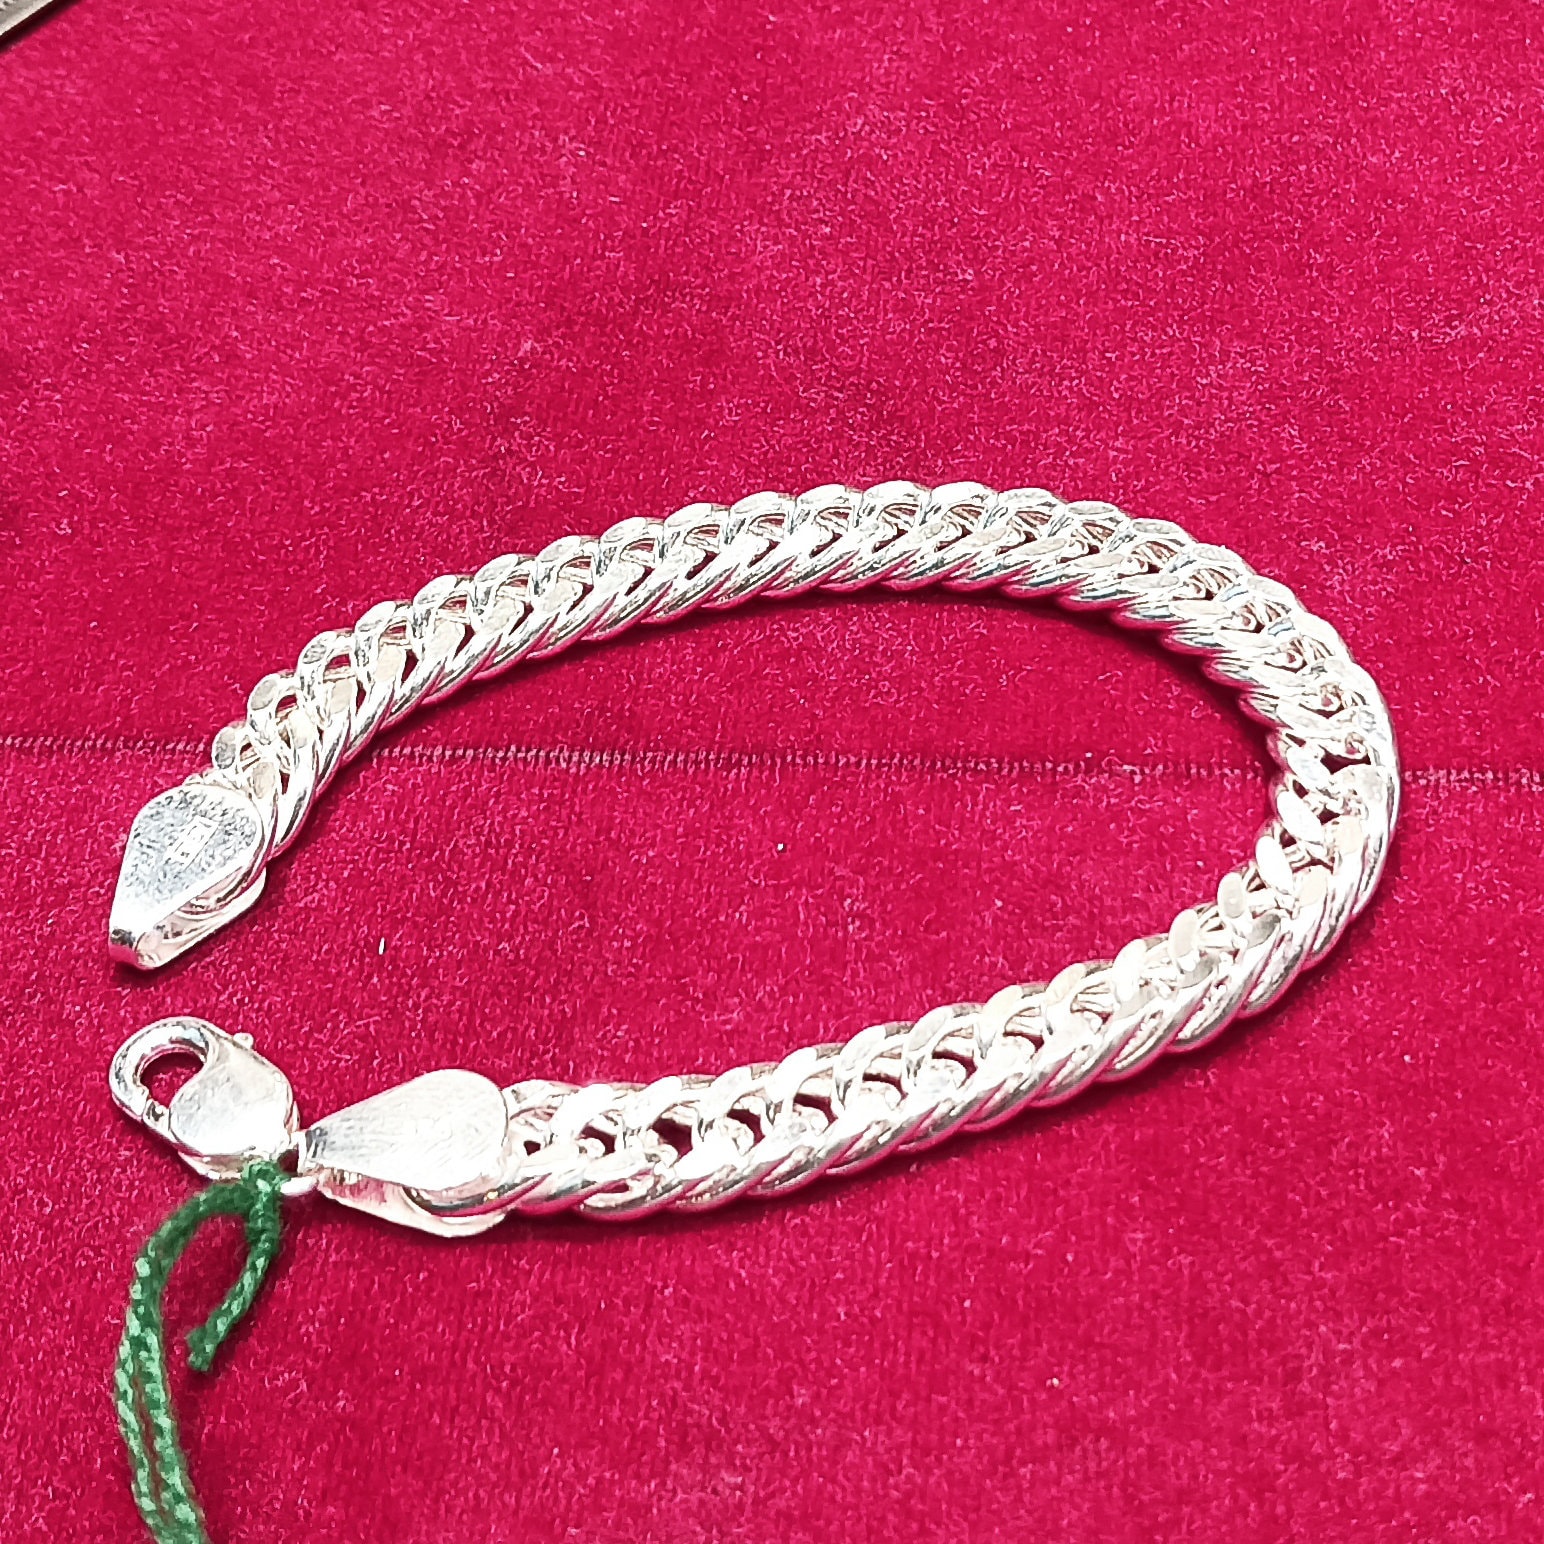 SAZ Overseer Chain Bracelet